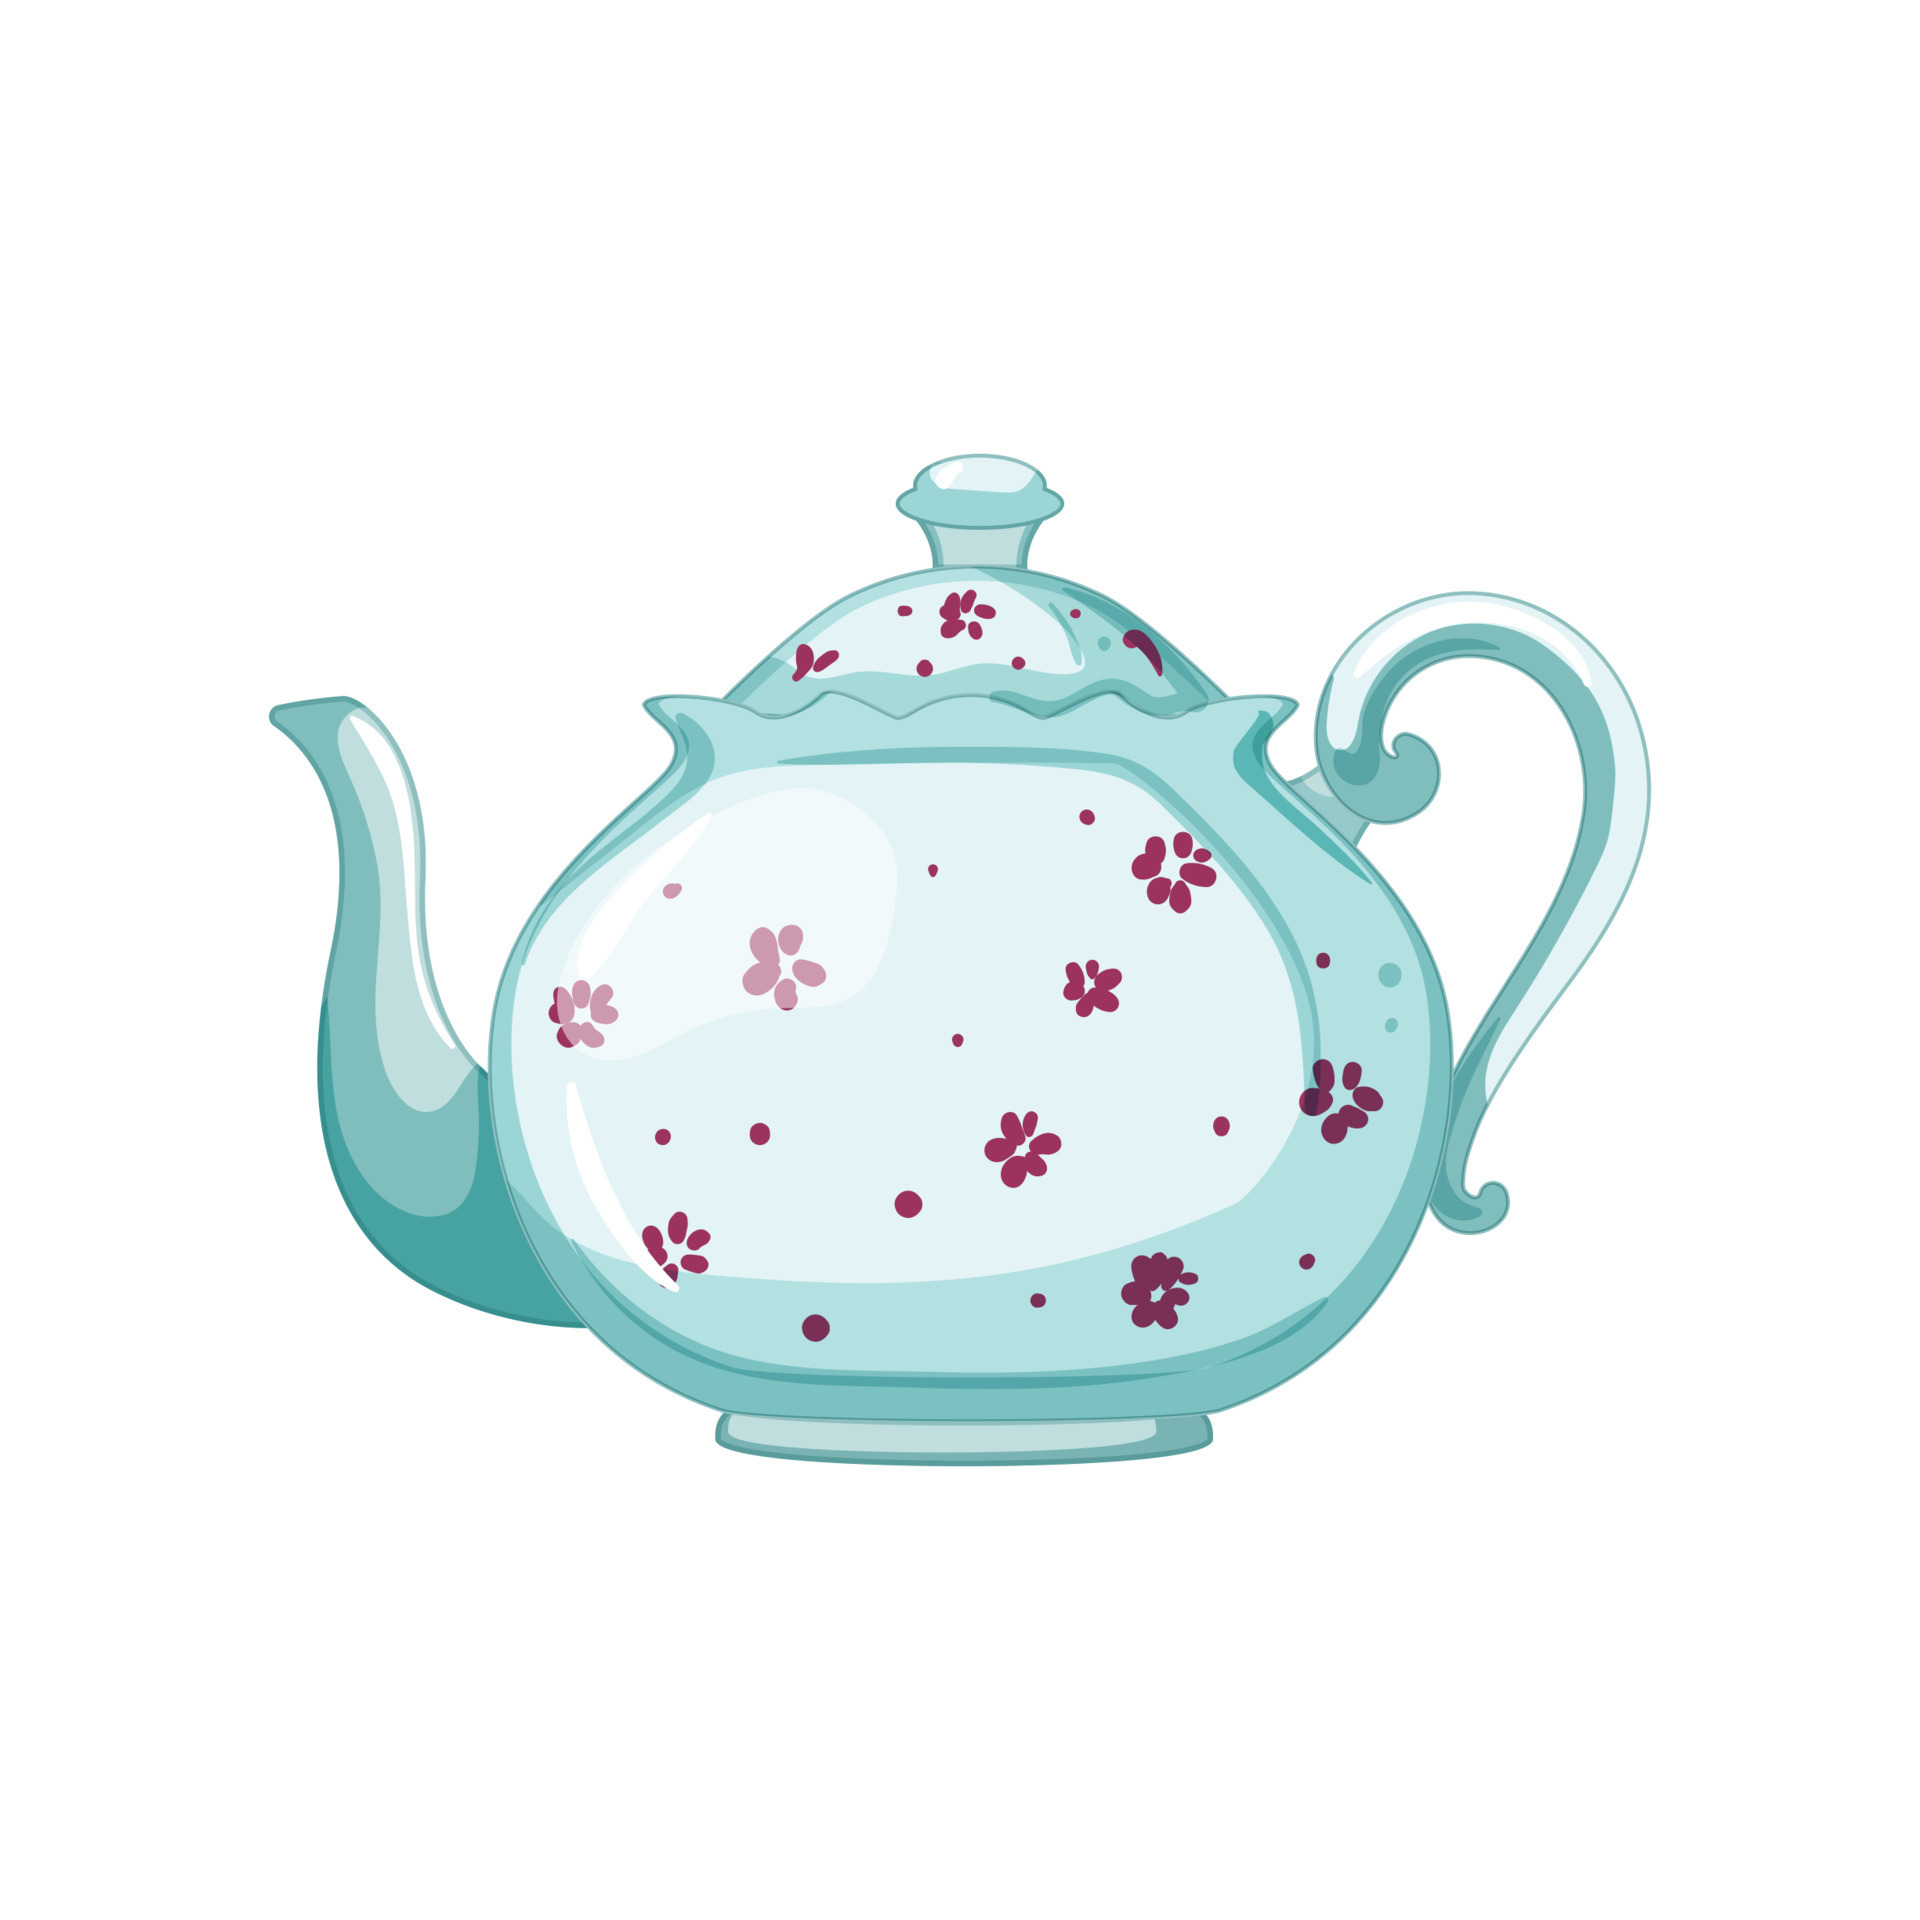 https://static.vecteezy.com/system/resources/previews/020/294/686/original/traditional-vintage-teapot-cartoon-illustration-vector.jpg